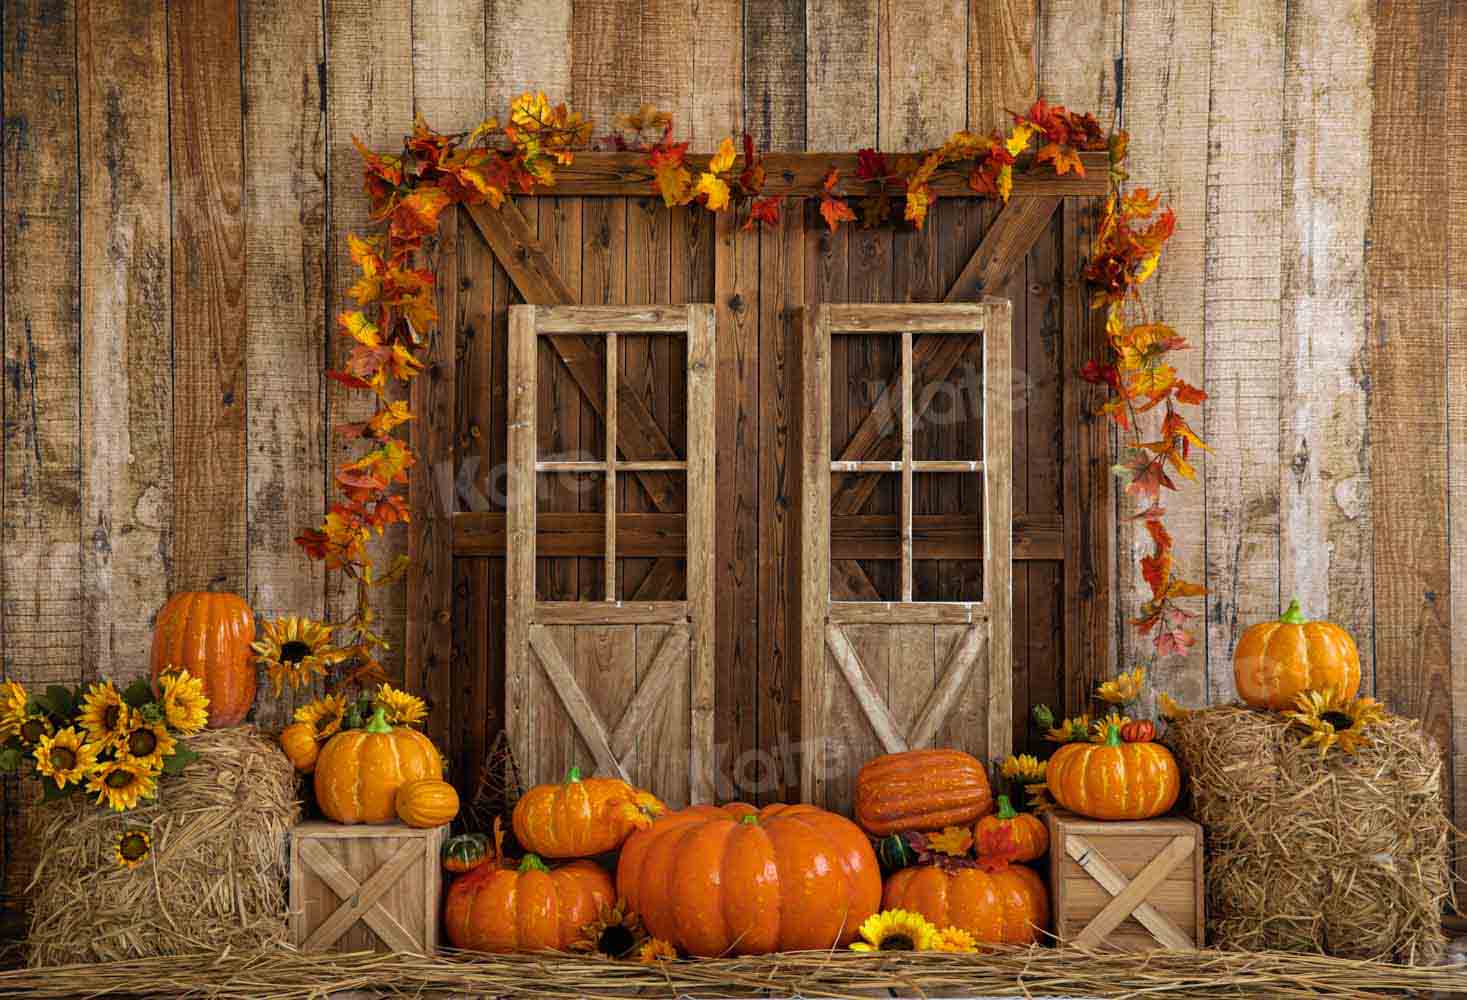 Kate Autumn Pumpkins Barn Door Backdrop Designed by Emetselch